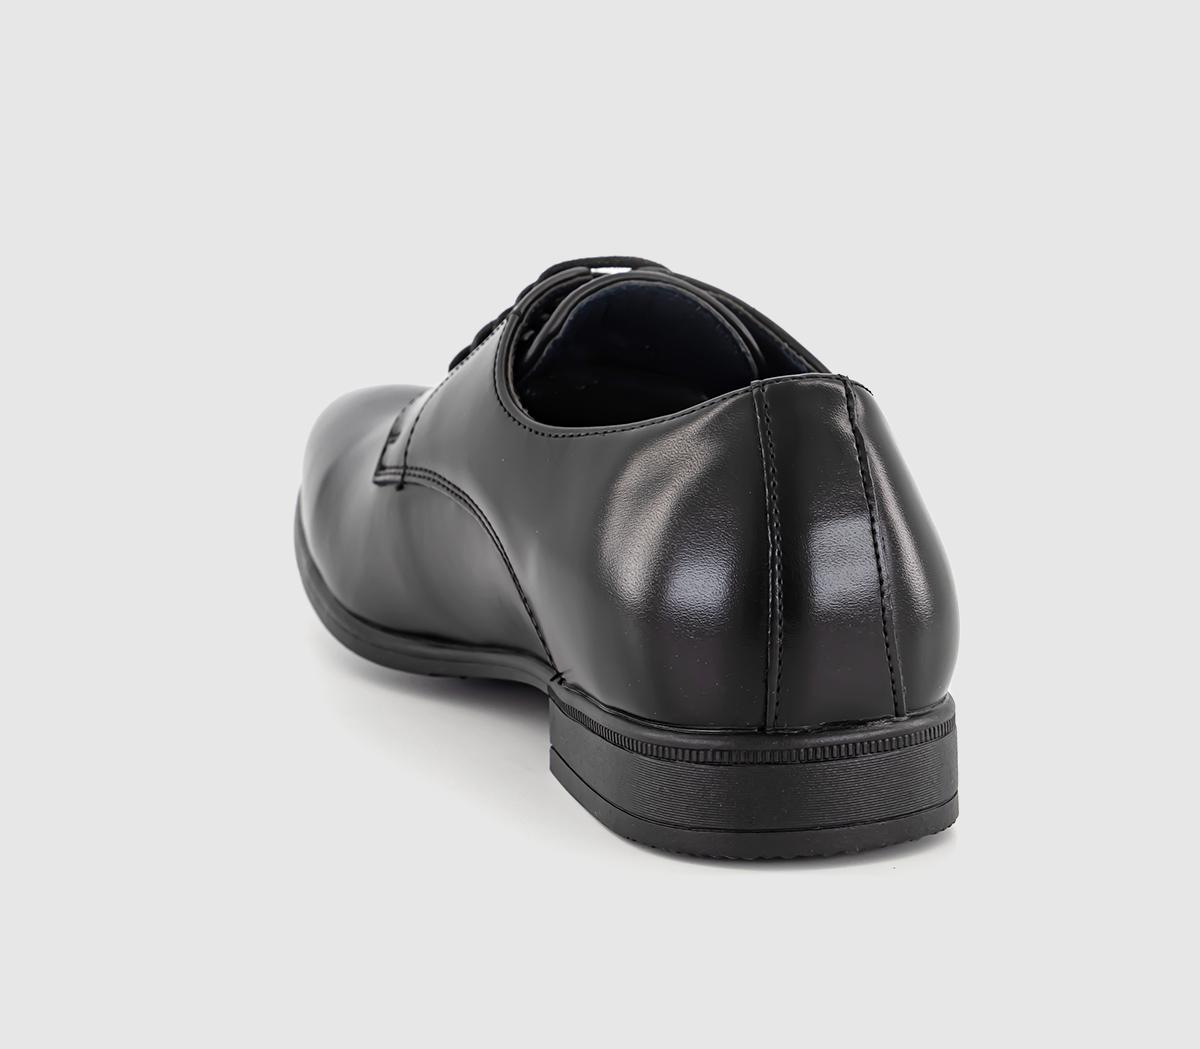 OFFICE Mayford Comfort Derby Shoes Black - Men’s Smart Shoes